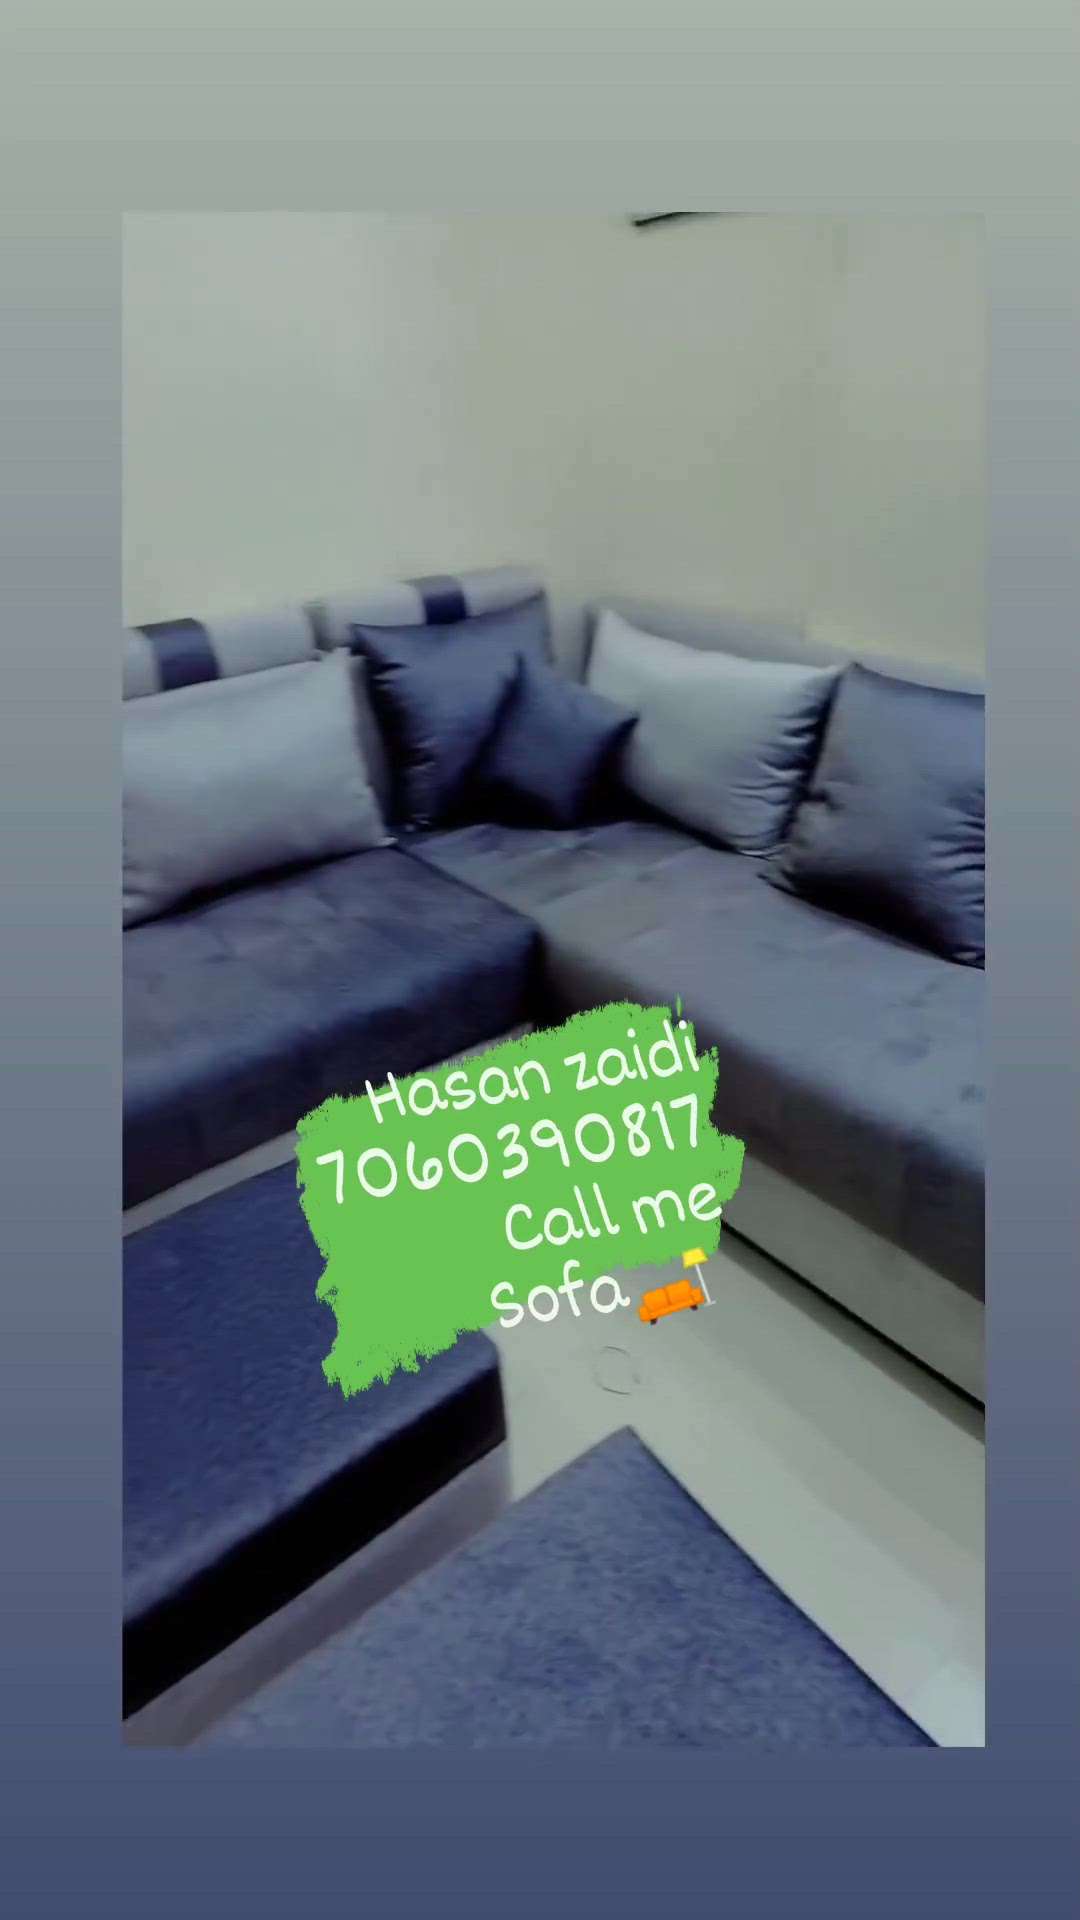 Hasan Zaidi new sofa design banate hain sofa repair karte Hain Delhi NCR kam karte Hain
7060390817
call me 📞